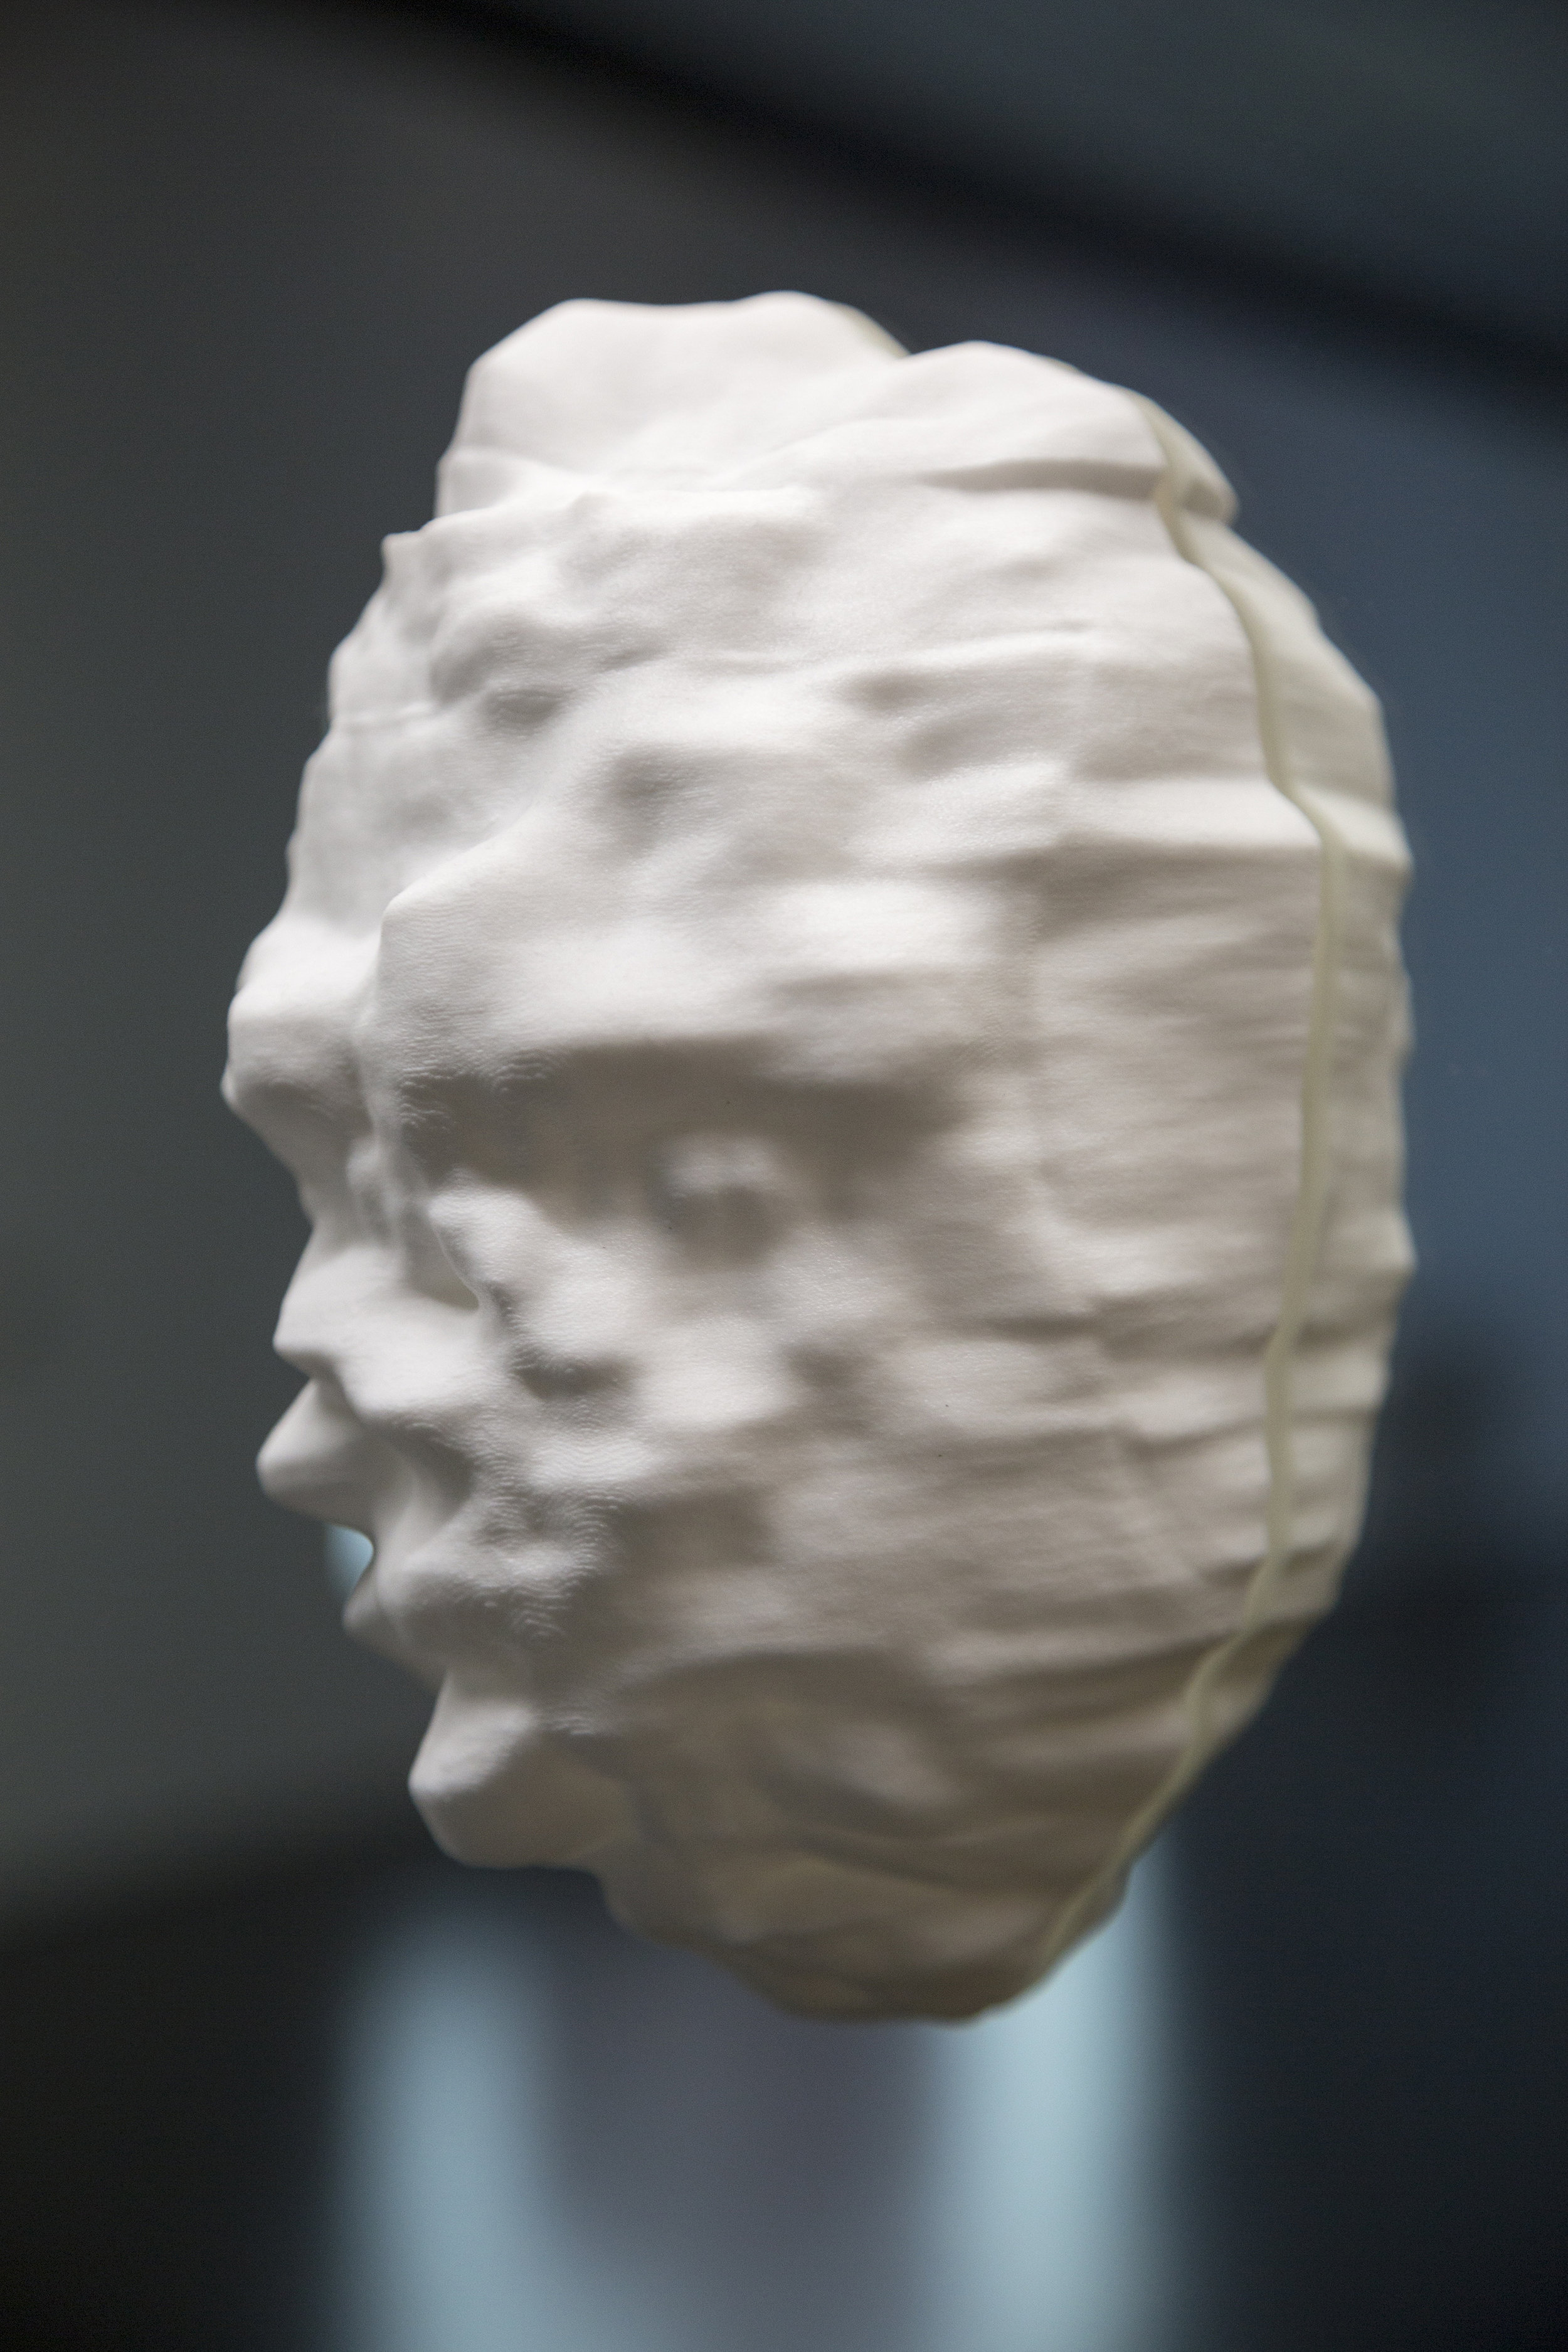   Sobek , 2015  3D printed nylon, glass mirror, facial recognition, genetic algorithms  26 × 18 inches | 66 × 45.7 cm 